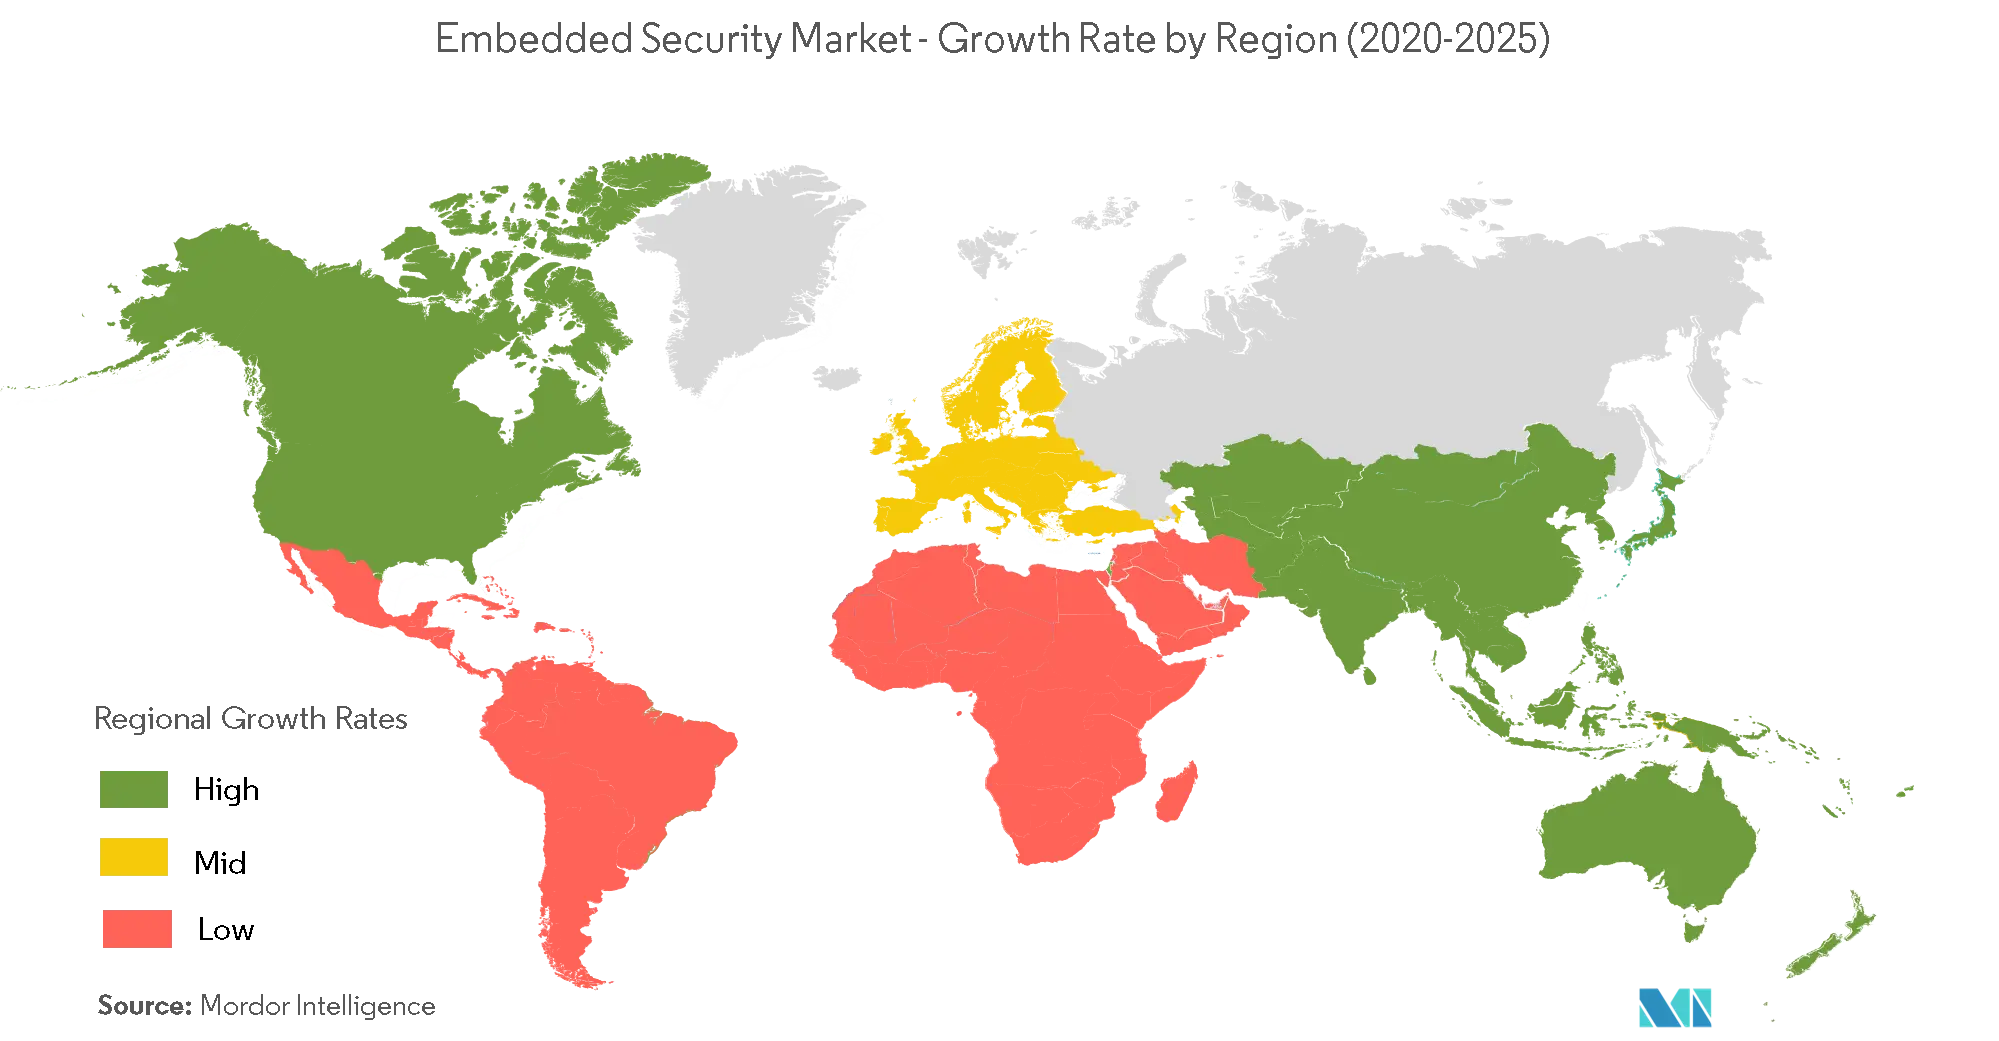 Embedded security market Growth by Region